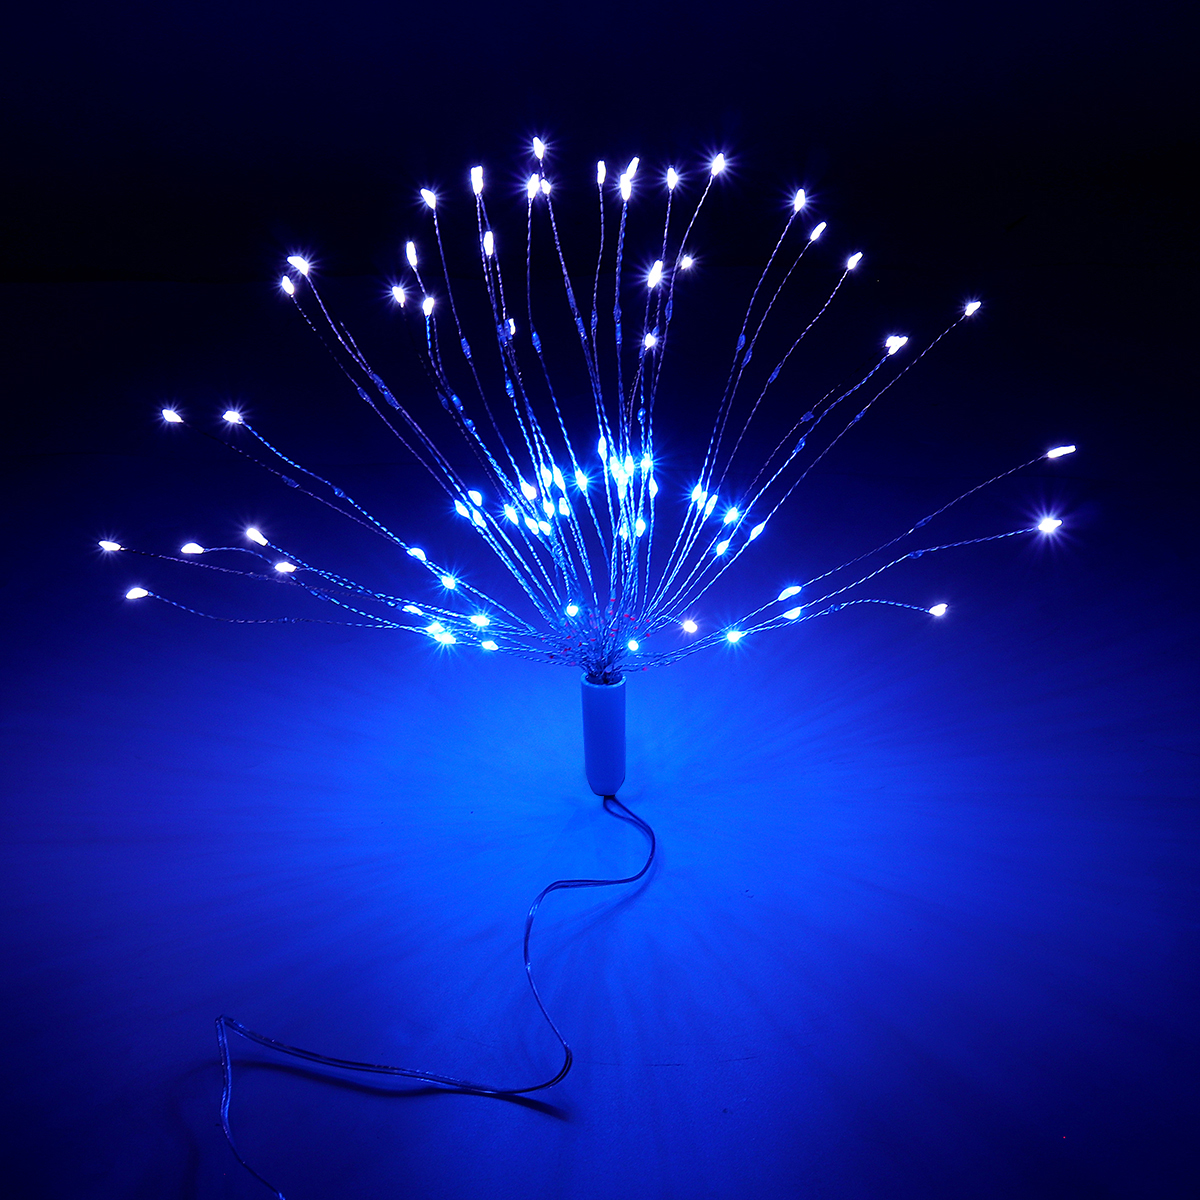 USB-Powered-DIY-Firework-Starburst-180-LED-Fairy-String-Light-Remote-Control-Christmas-Decor-DC5V-1378366-9